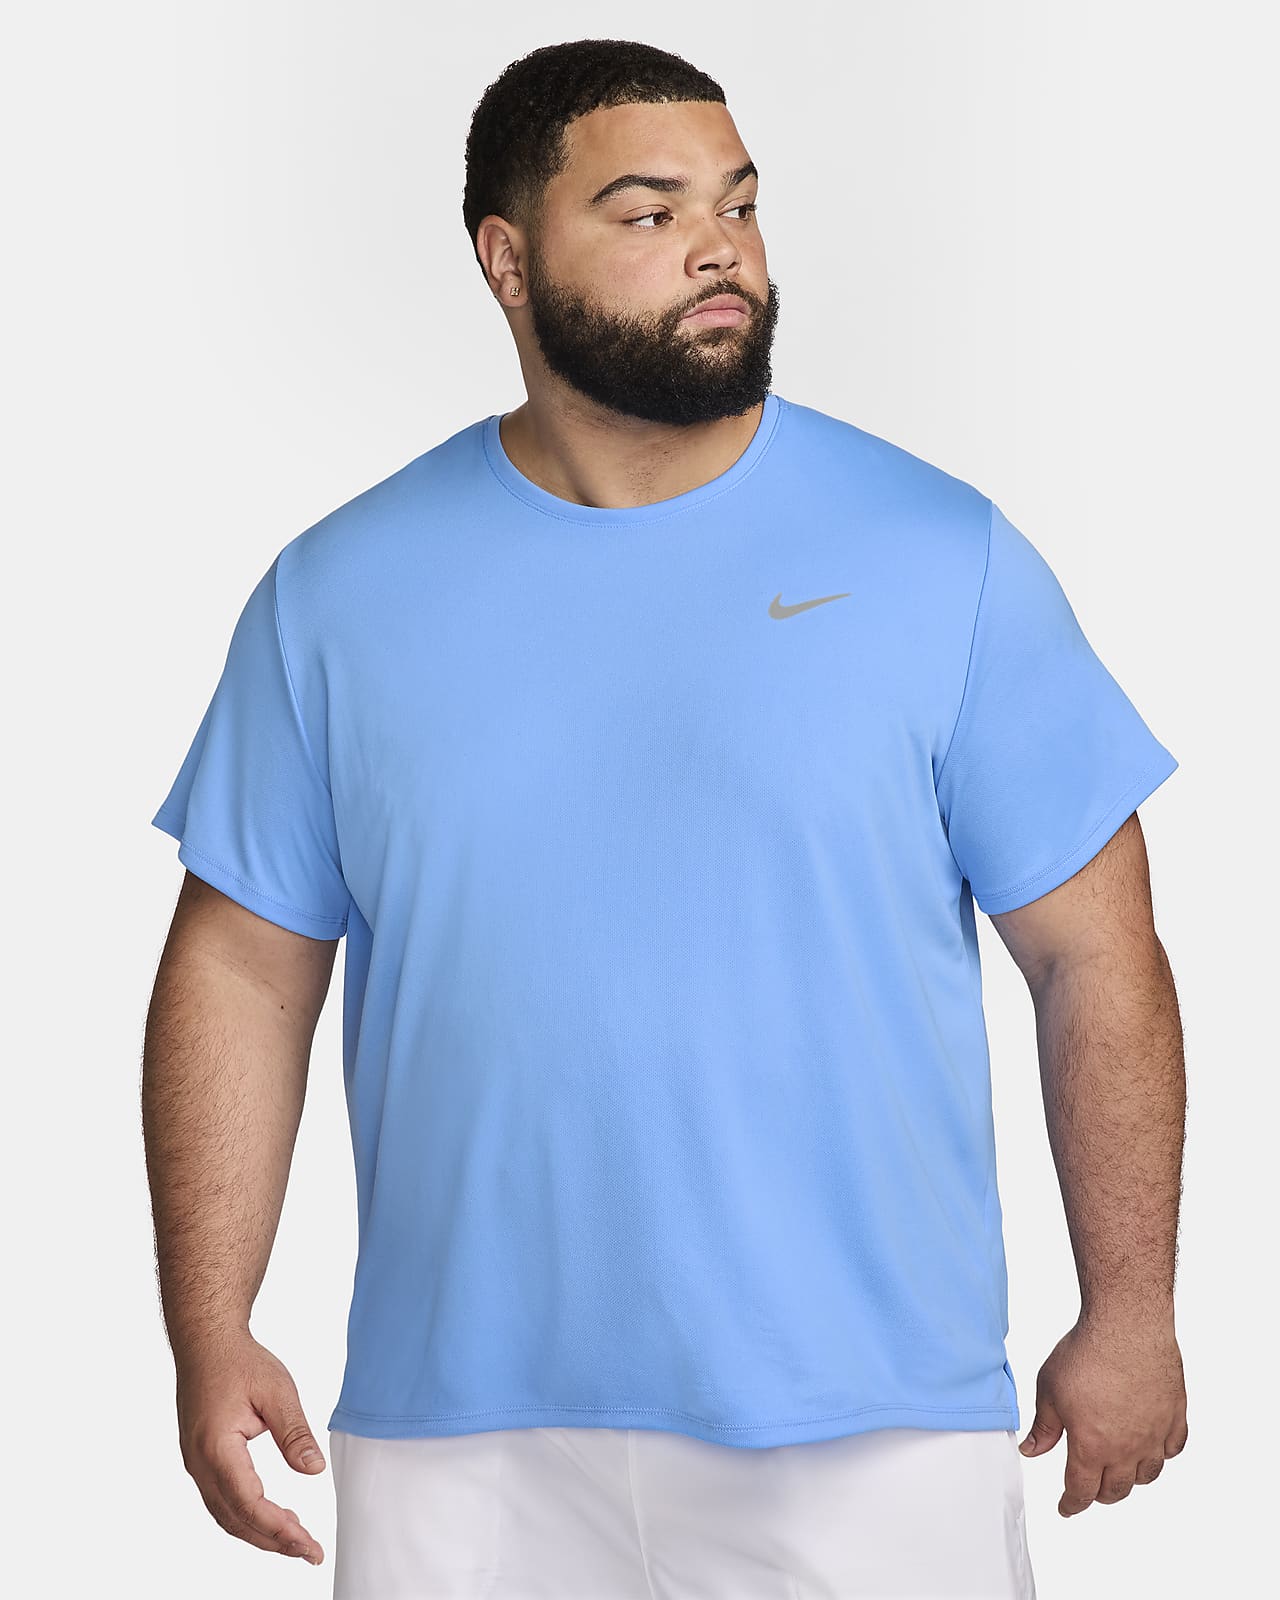 Nike Dri-FIT UV Run Division Miler Men's Short-Sleeve Graphic Running Top.